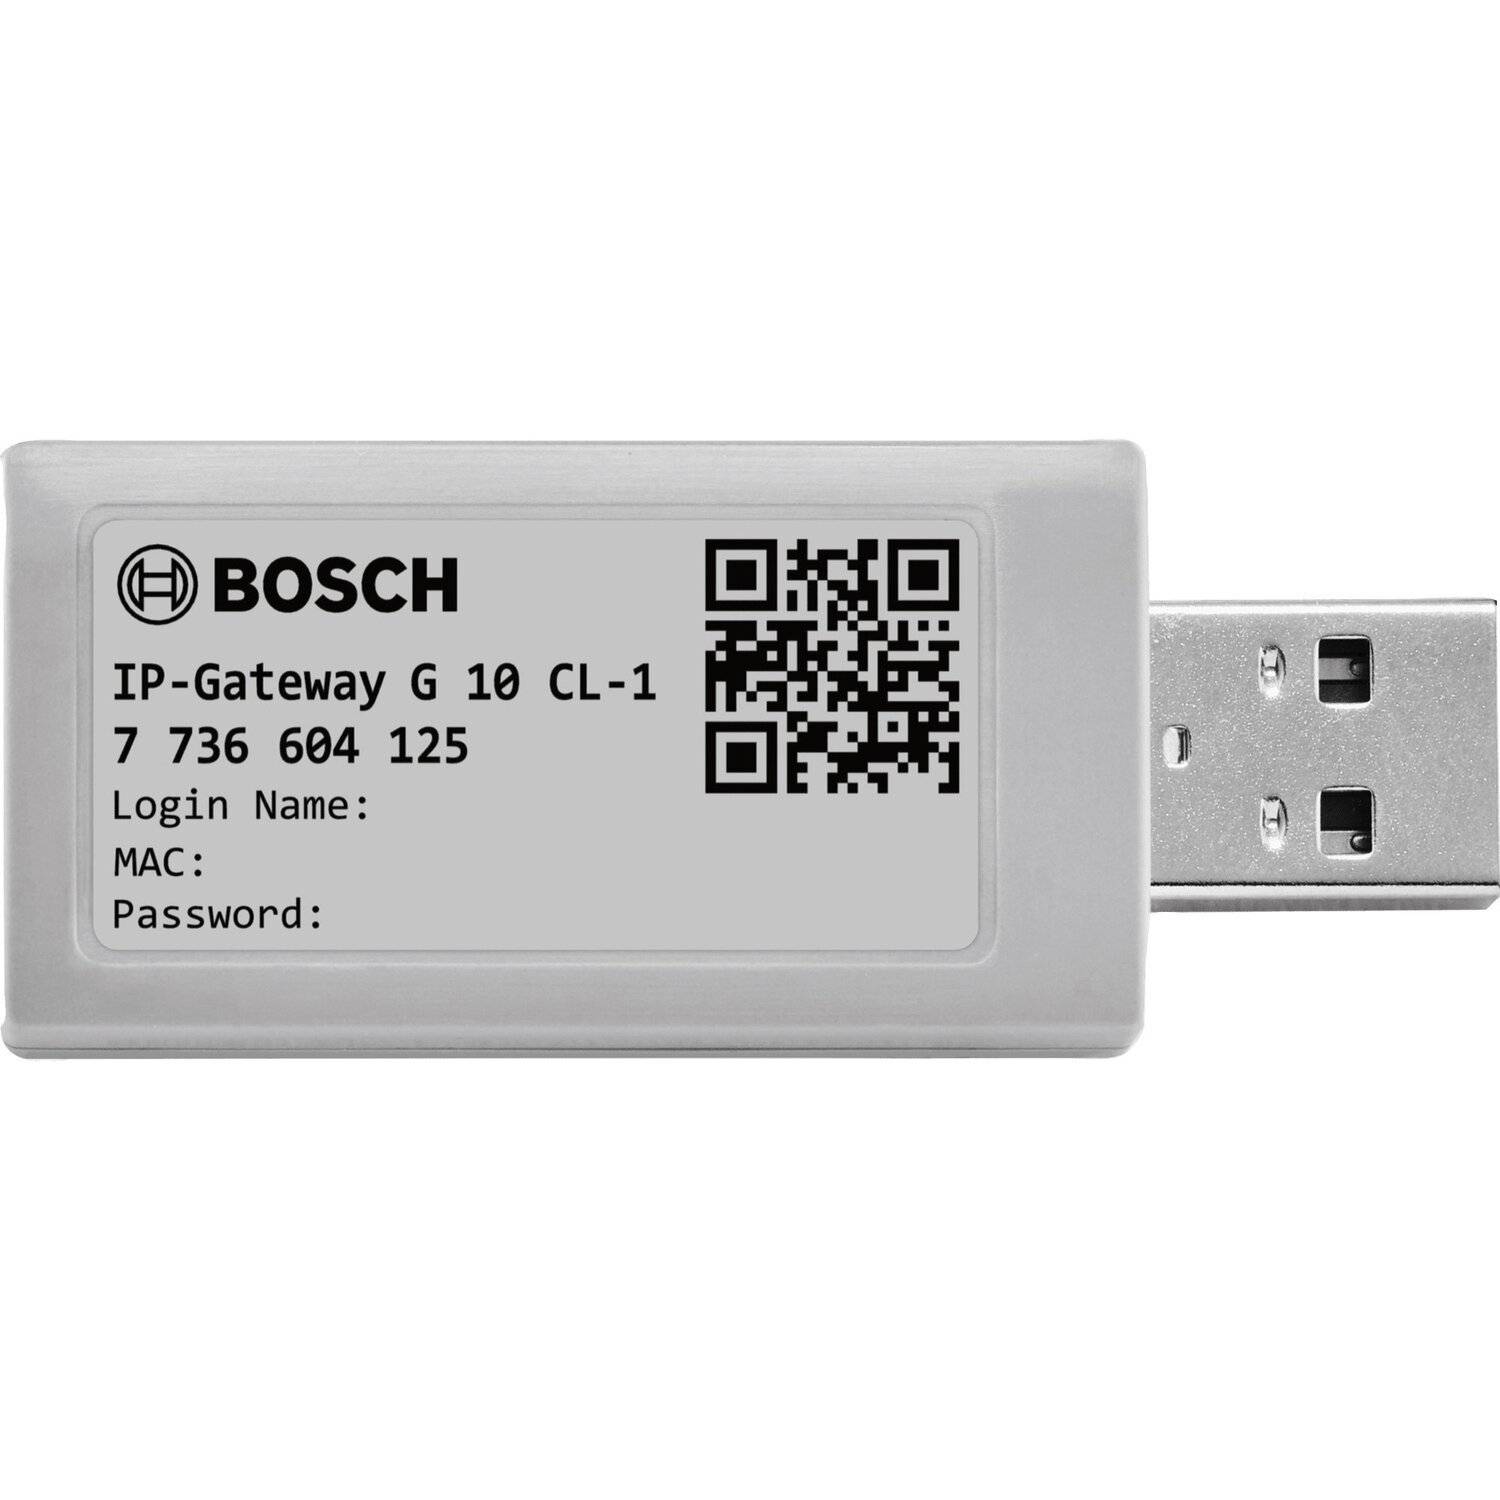 Адаптер Wi-Fi Bosch MiAc-03 G10CL1 для кондиционеров Bosch CL3000i, CL5000i фото 